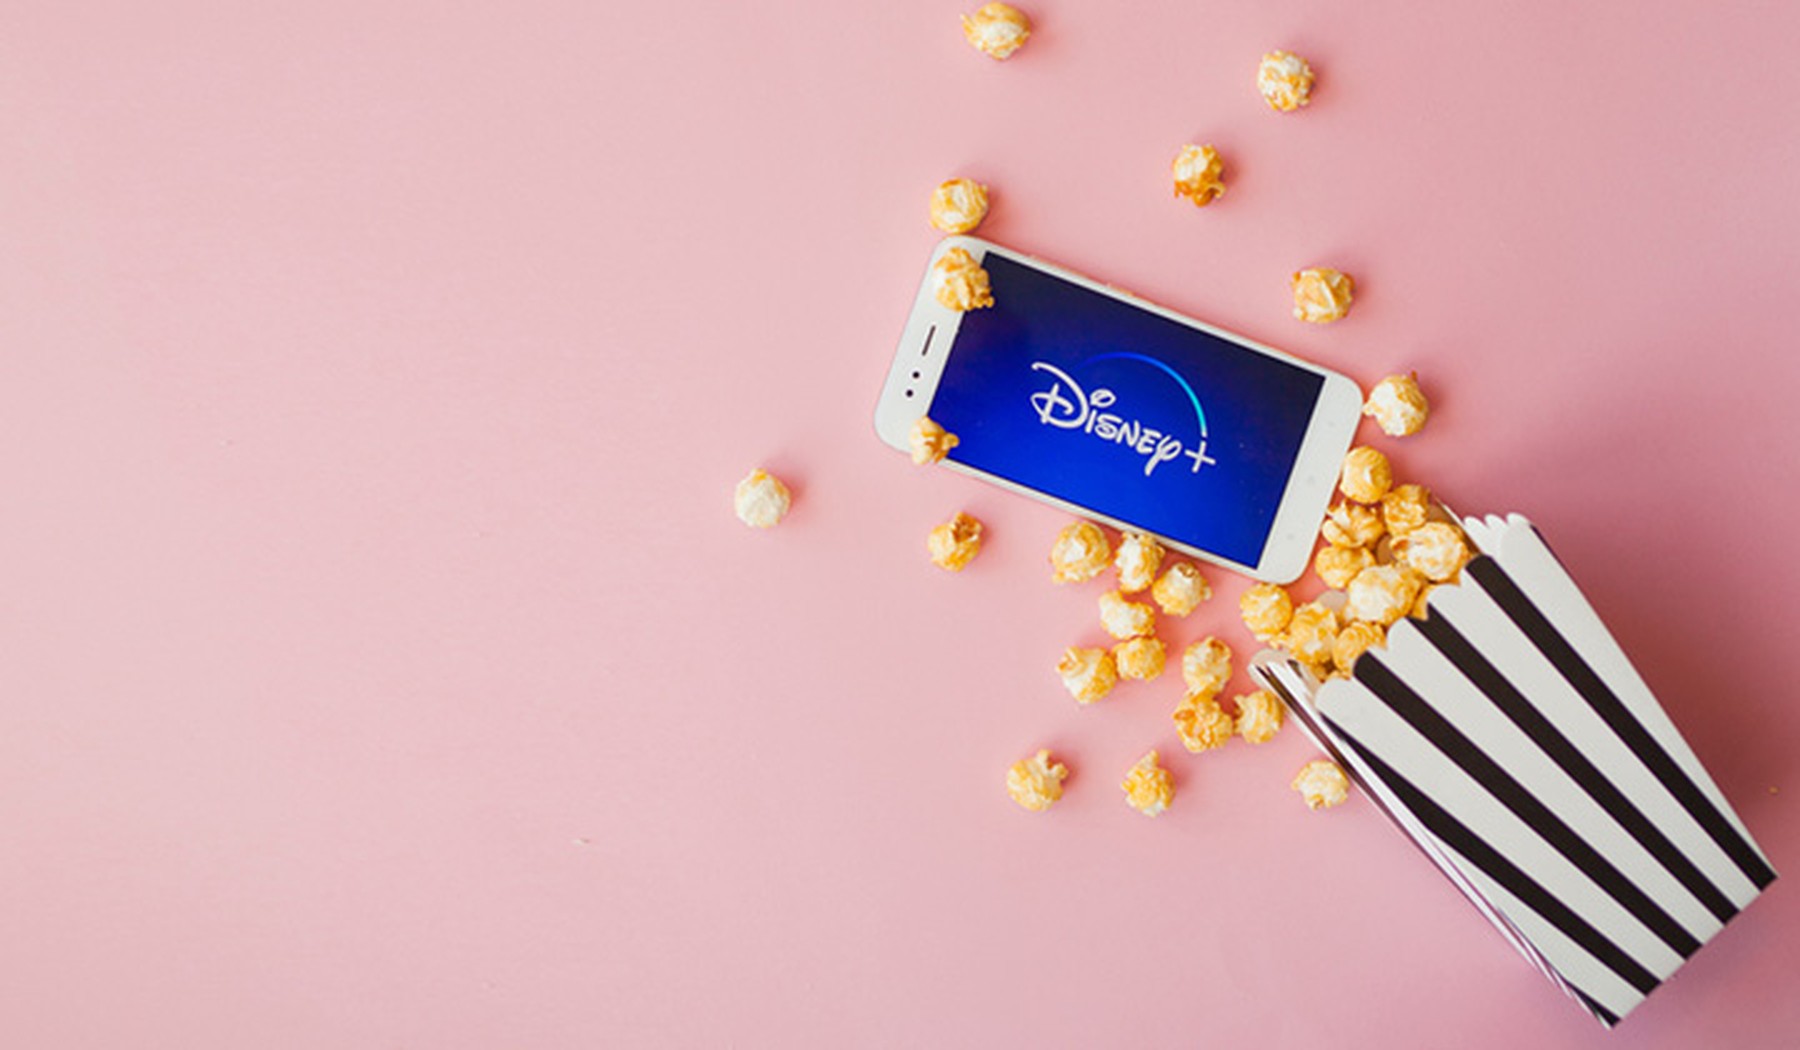 Disney Plus smartphone popcorn